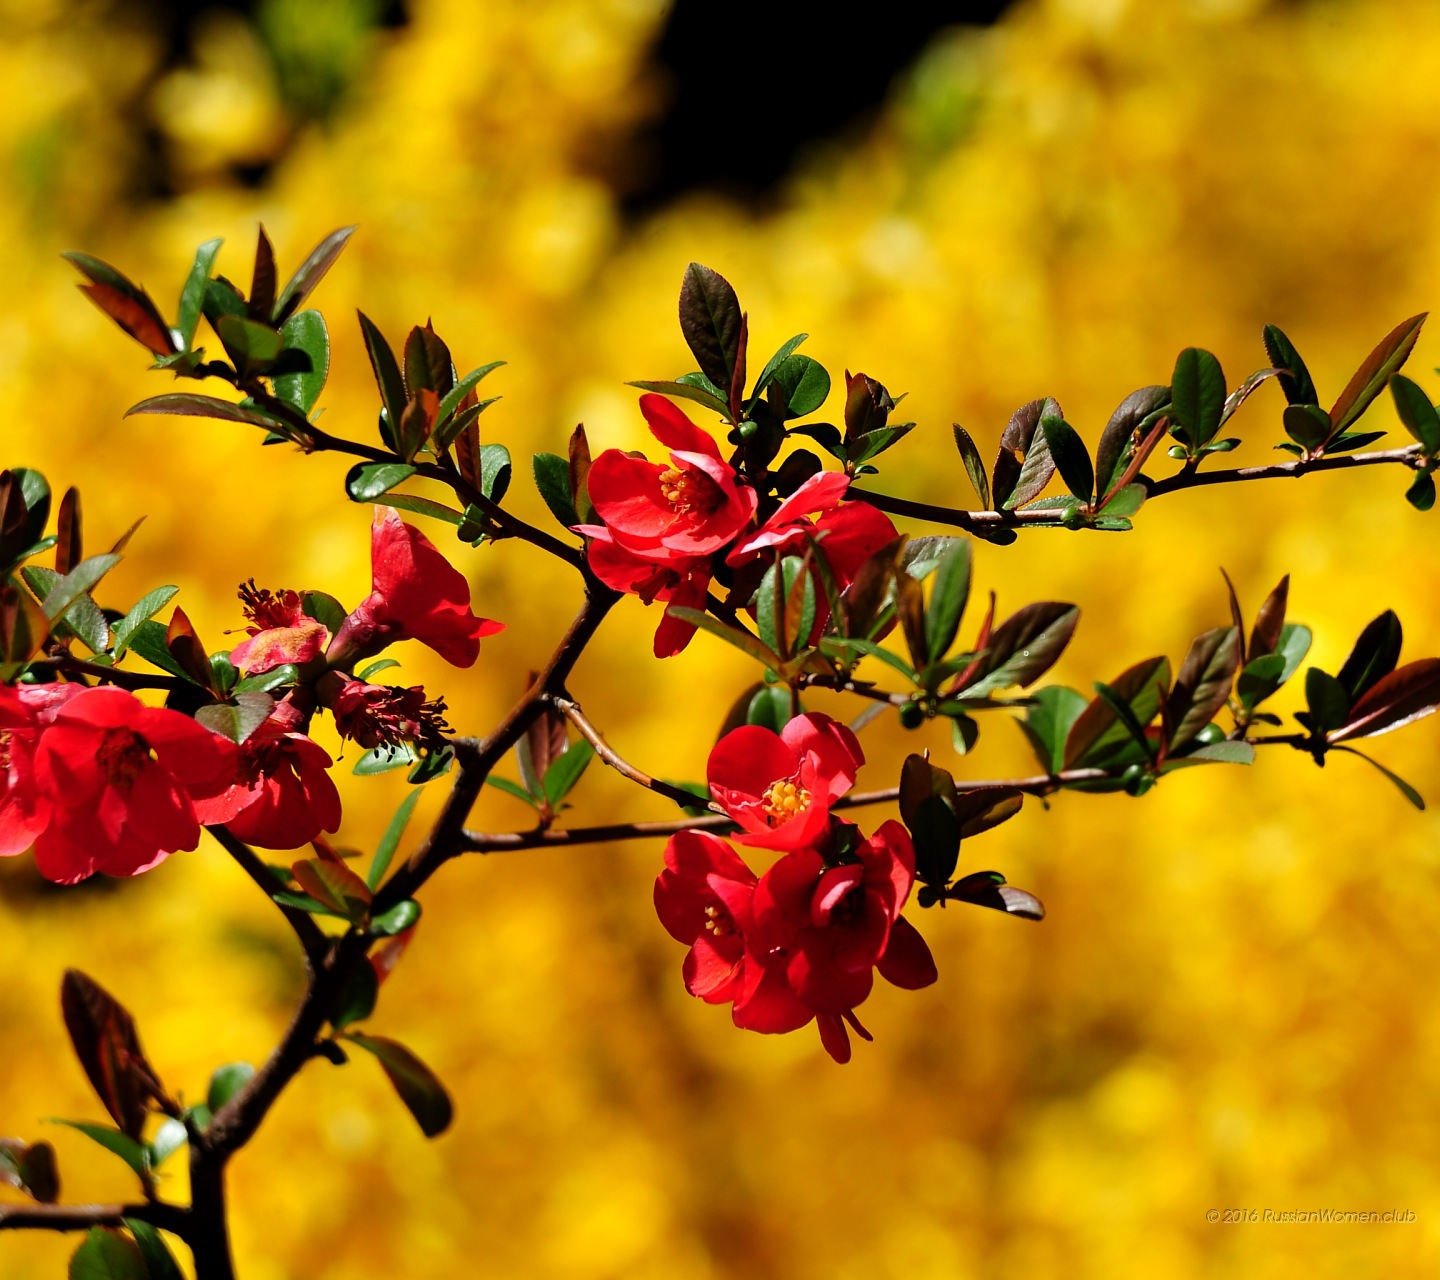 sfondi yu yureka,fiore,pianta,pianta fiorita,giallo,primavera